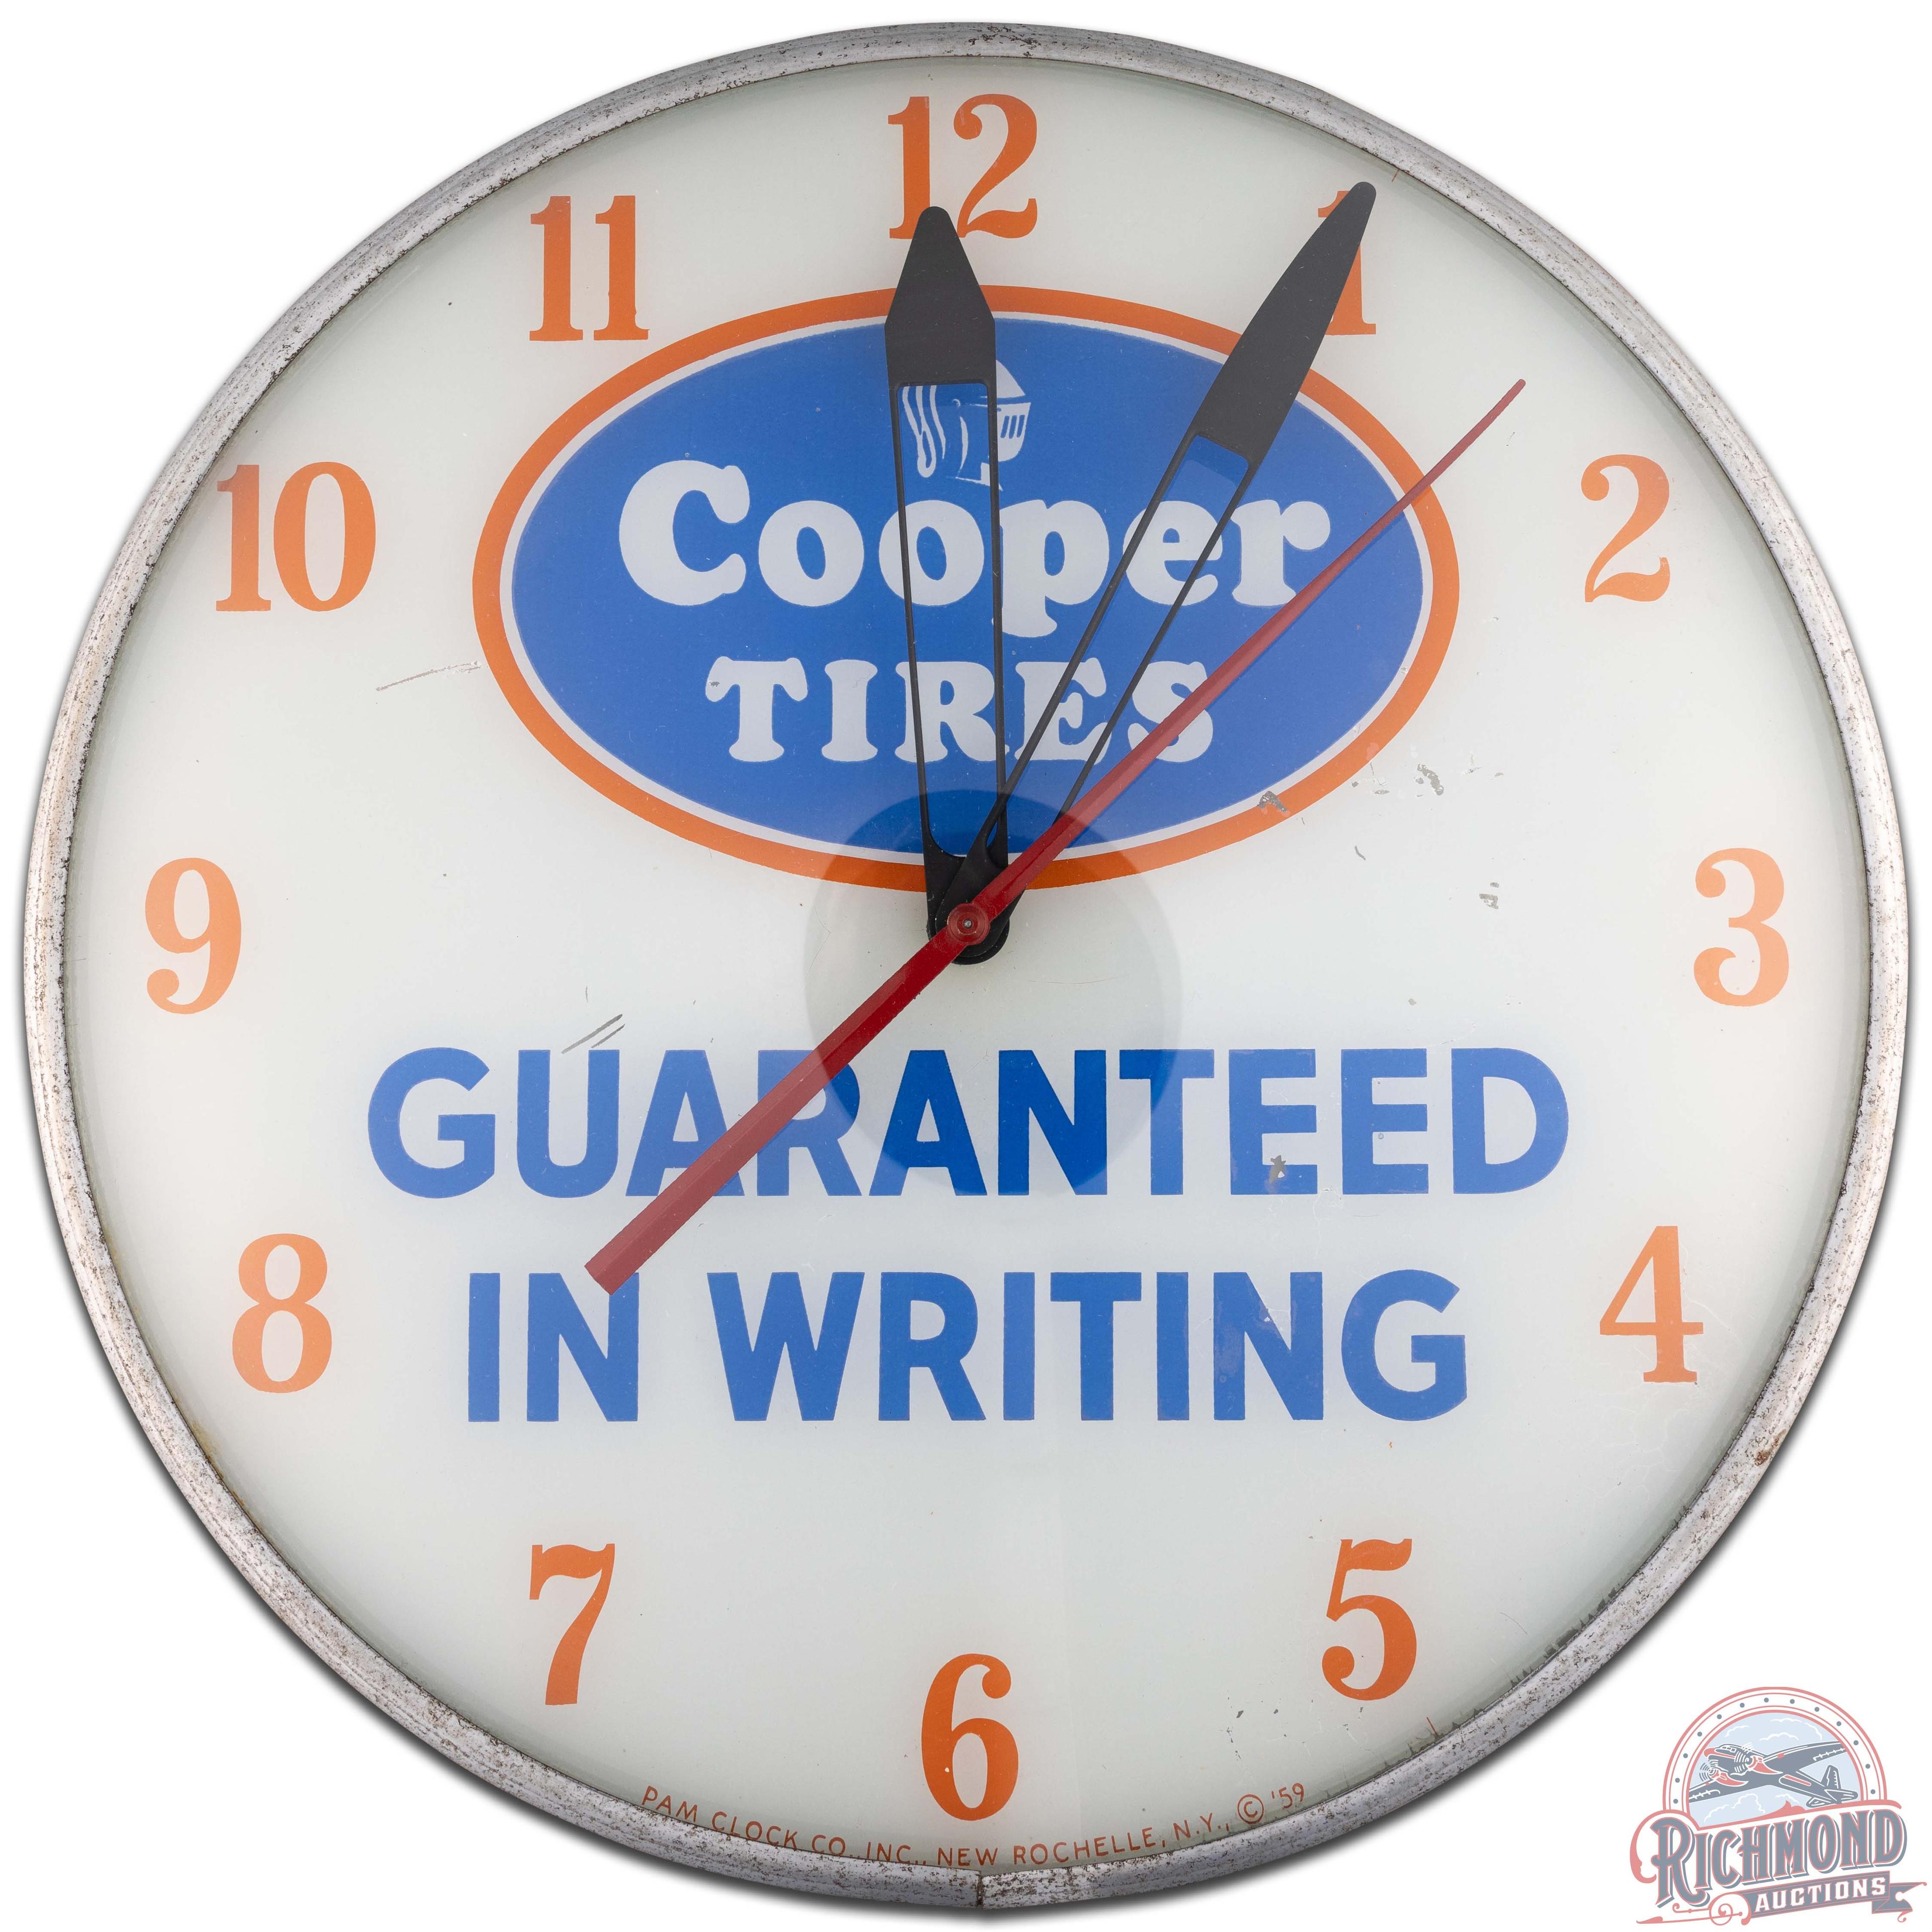 Cooper Tires "Guaranteed In Writing" 15" PAM Advertising Clock w/ Logo